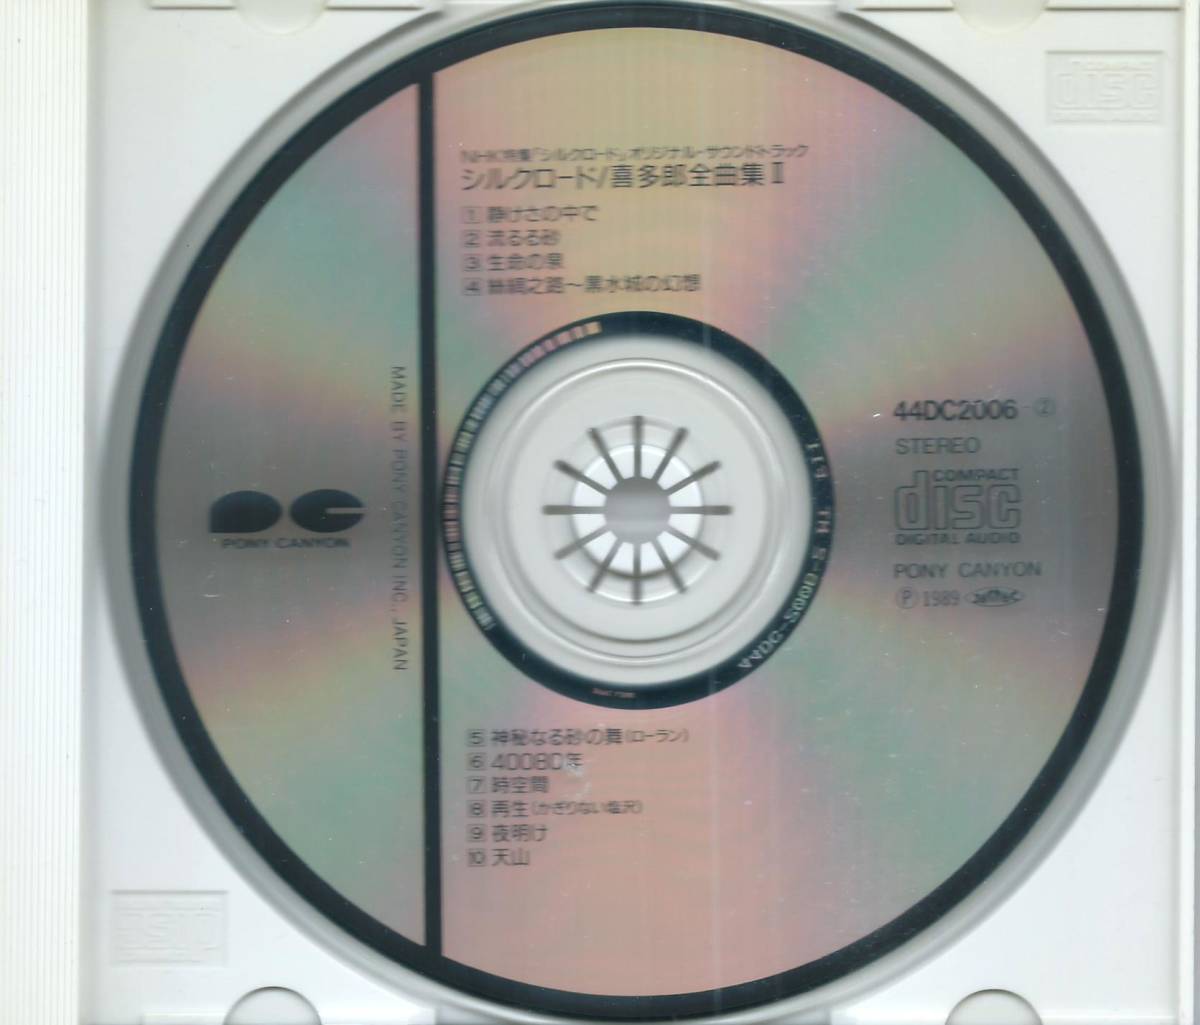 KITARO / Silk Road 1 & 2 - 44DC2006 国内盤CD 2枚組・レア！喜多郎 全曲集 NHK特集「シルクロード」オリジナル・サウンドトラック 全22曲_画像10